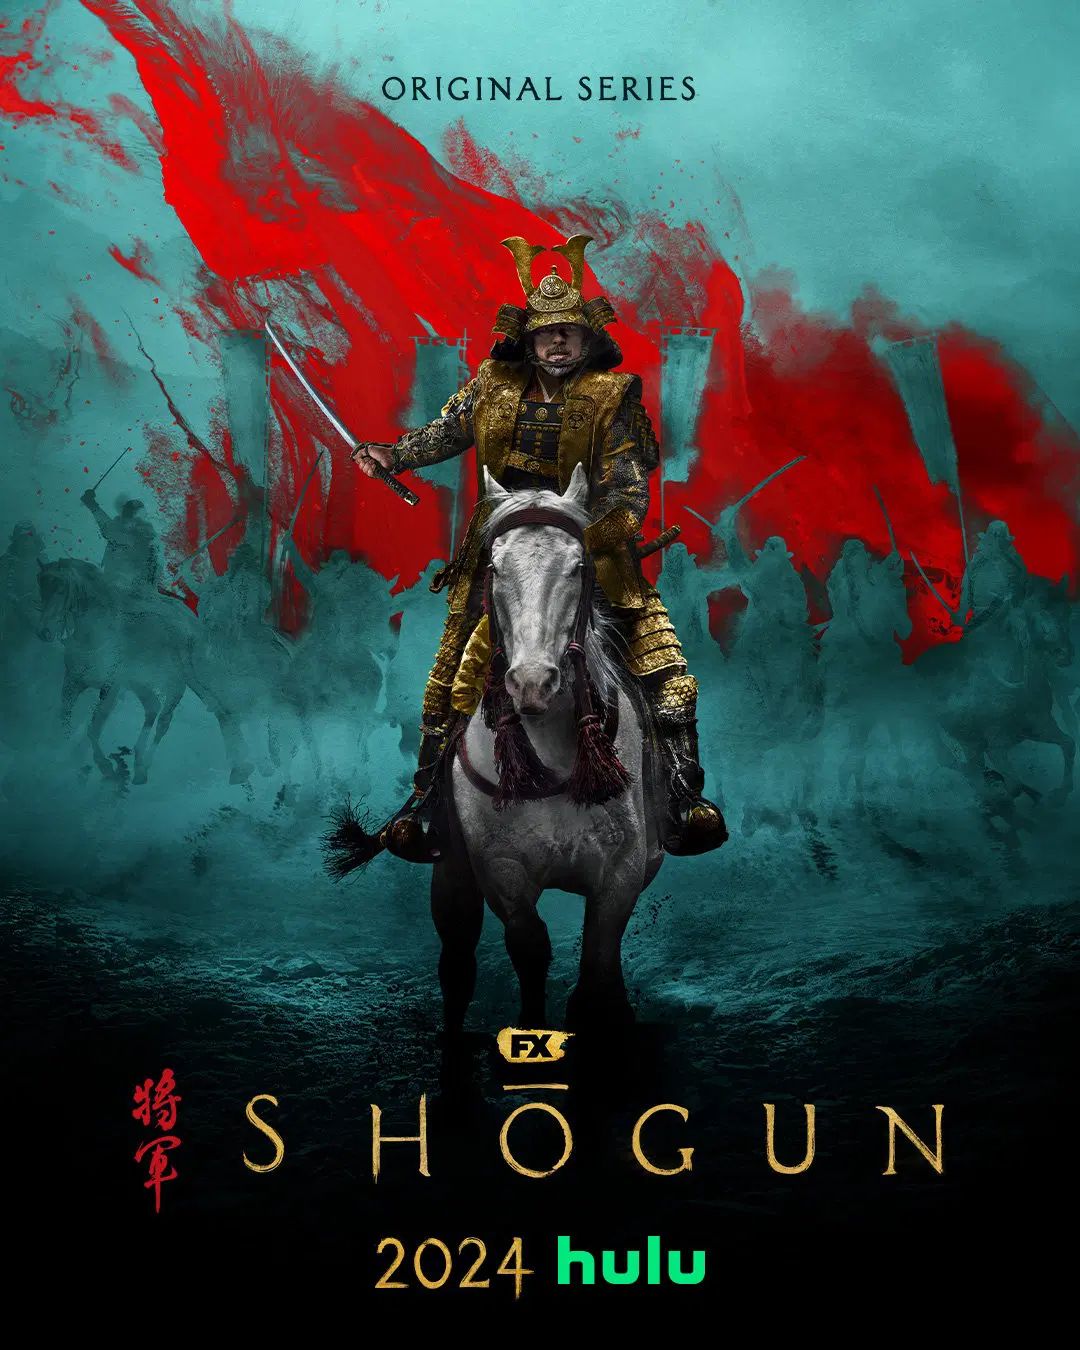 shogun: how yabushige has become toranaga's secret weapon